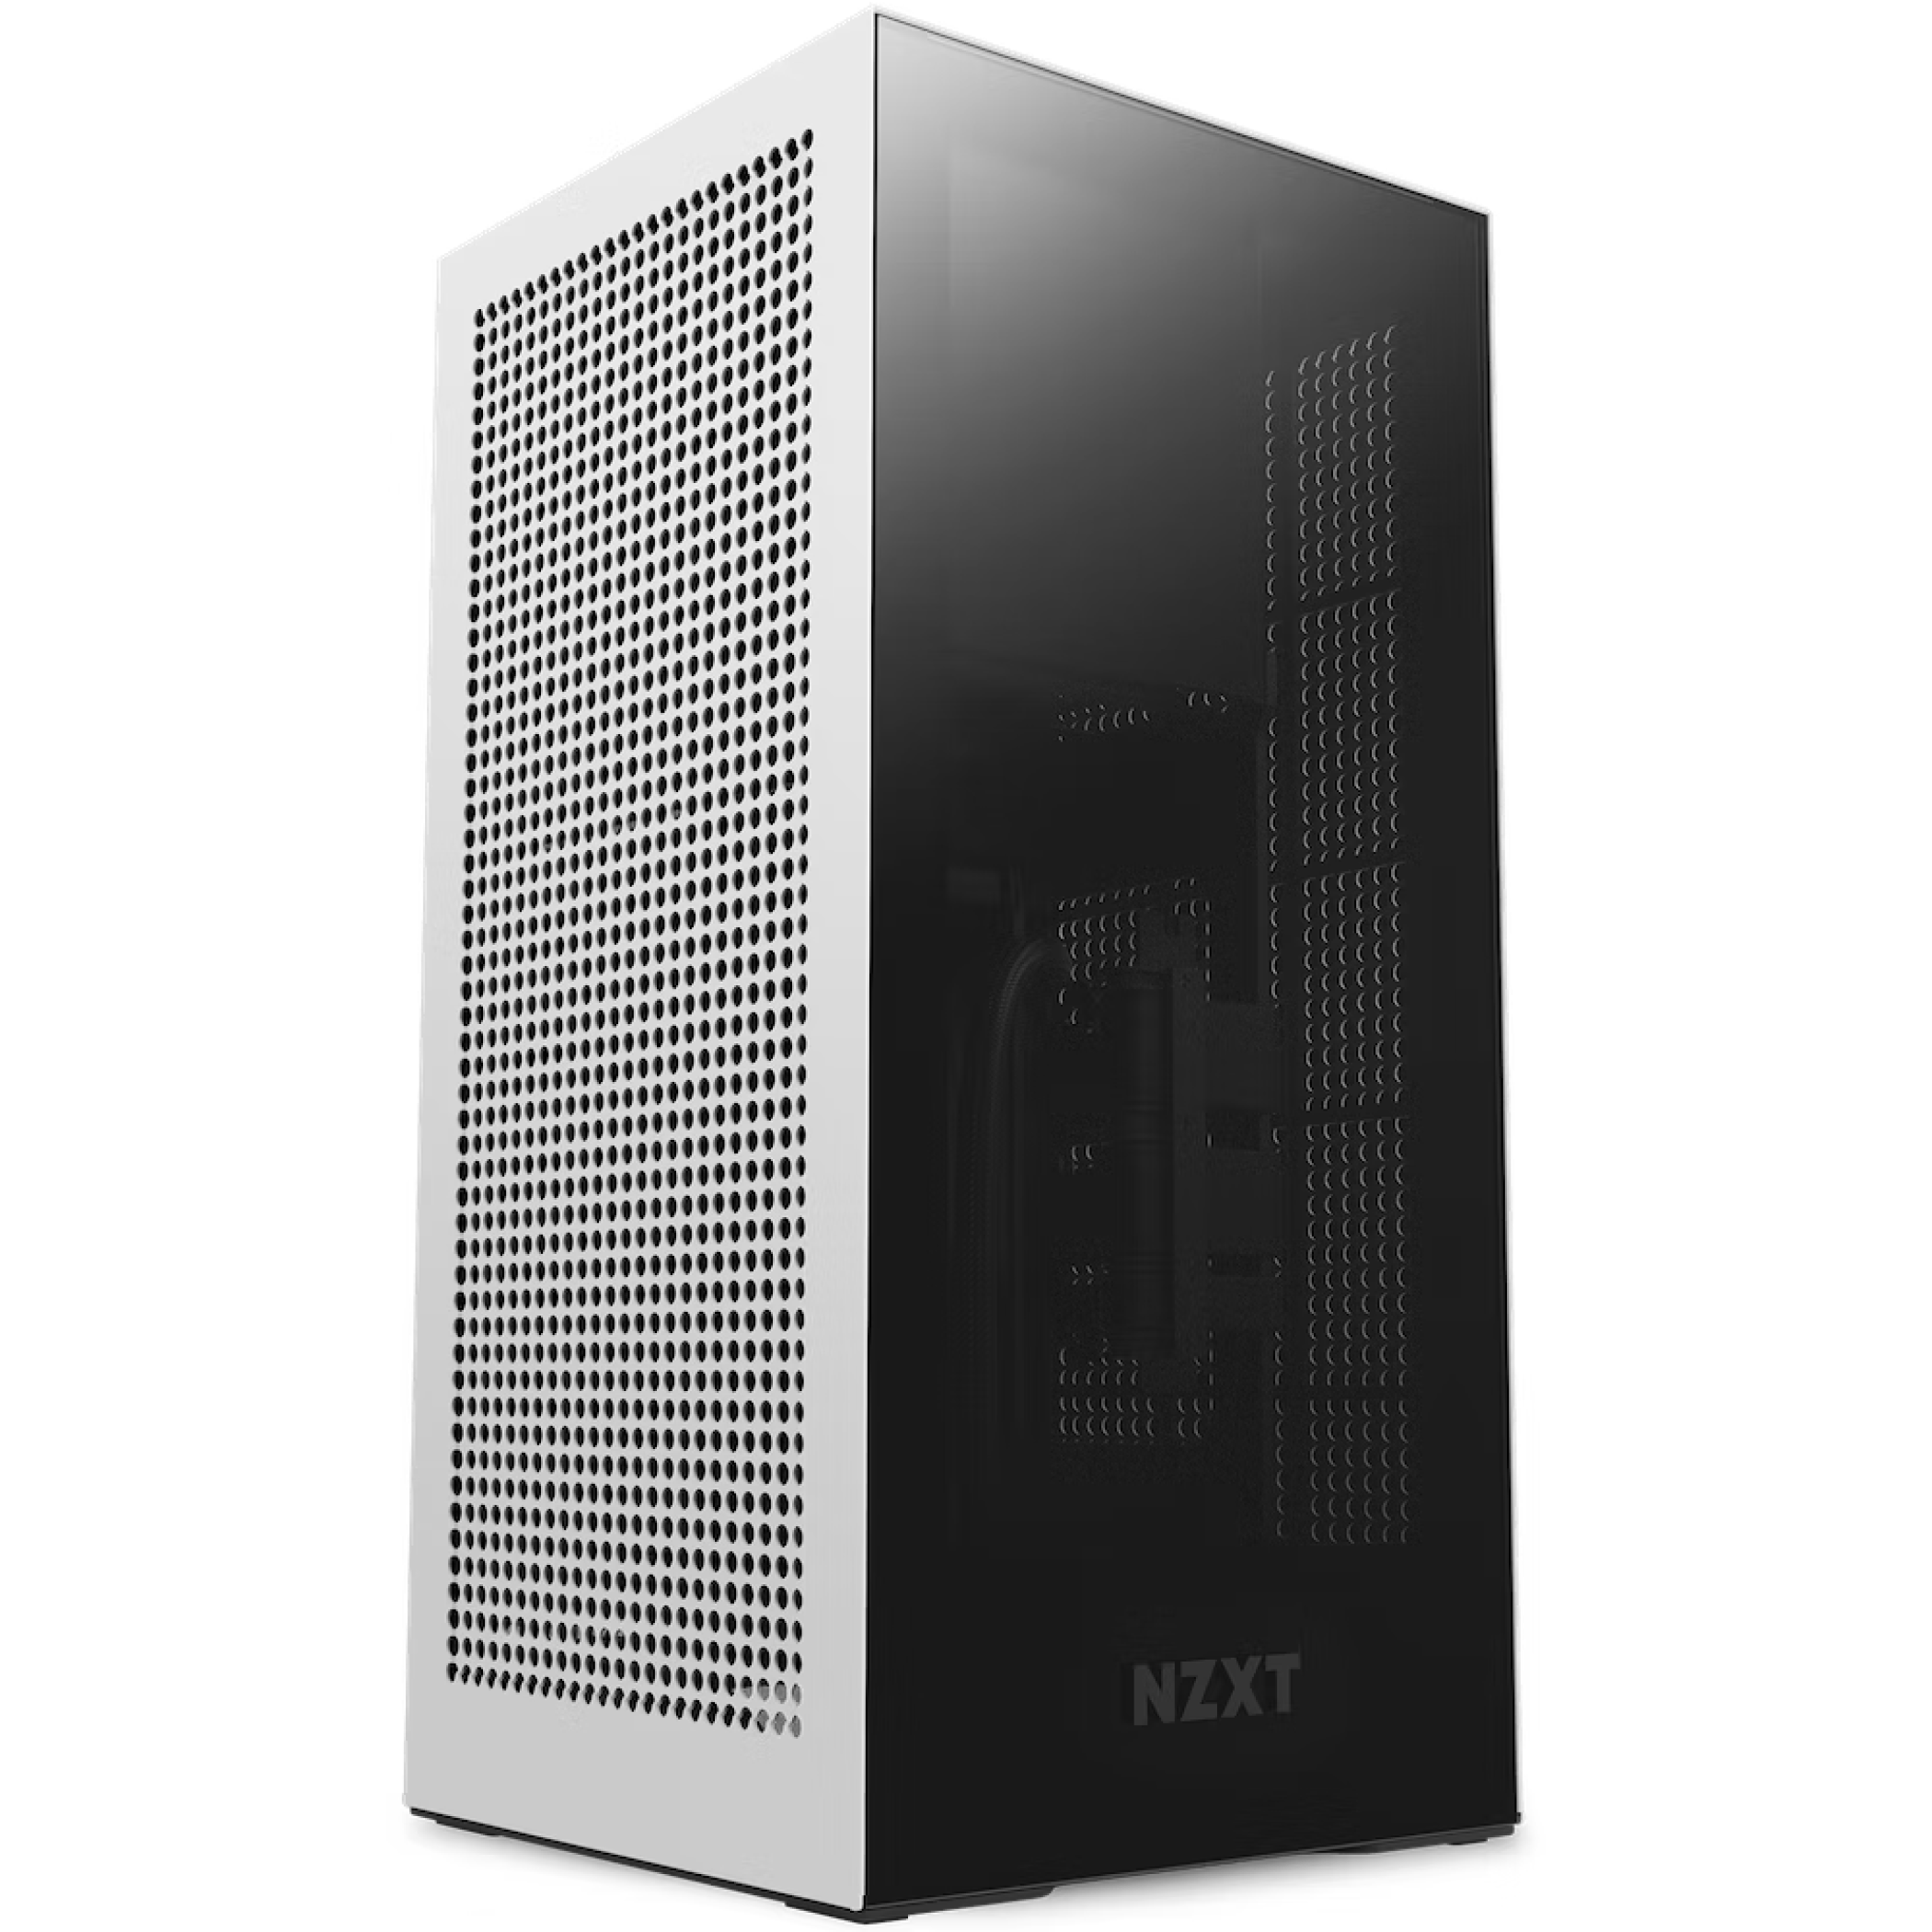 The NZXT H1 Version 2 mini-ITX case.